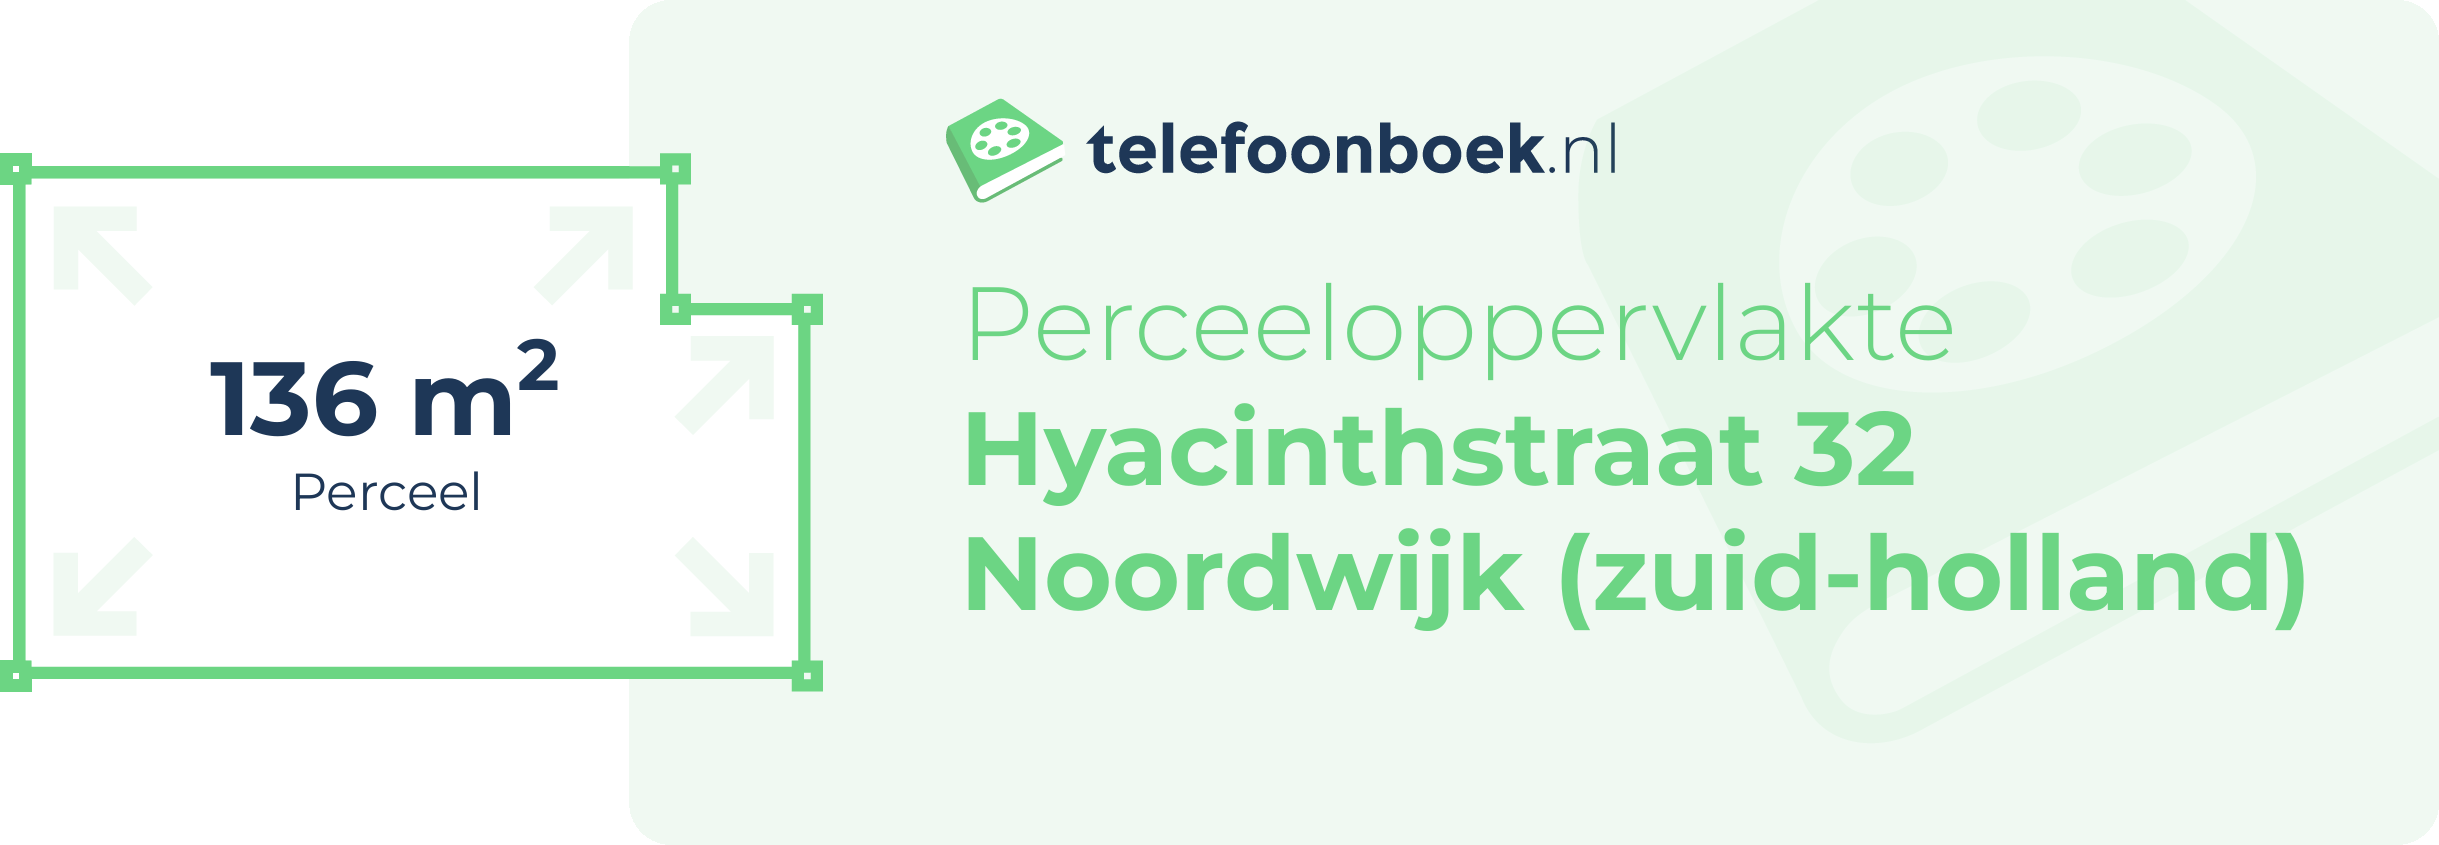 Perceeloppervlakte Hyacinthstraat 32 Noordwijk (Zuid-Holland)